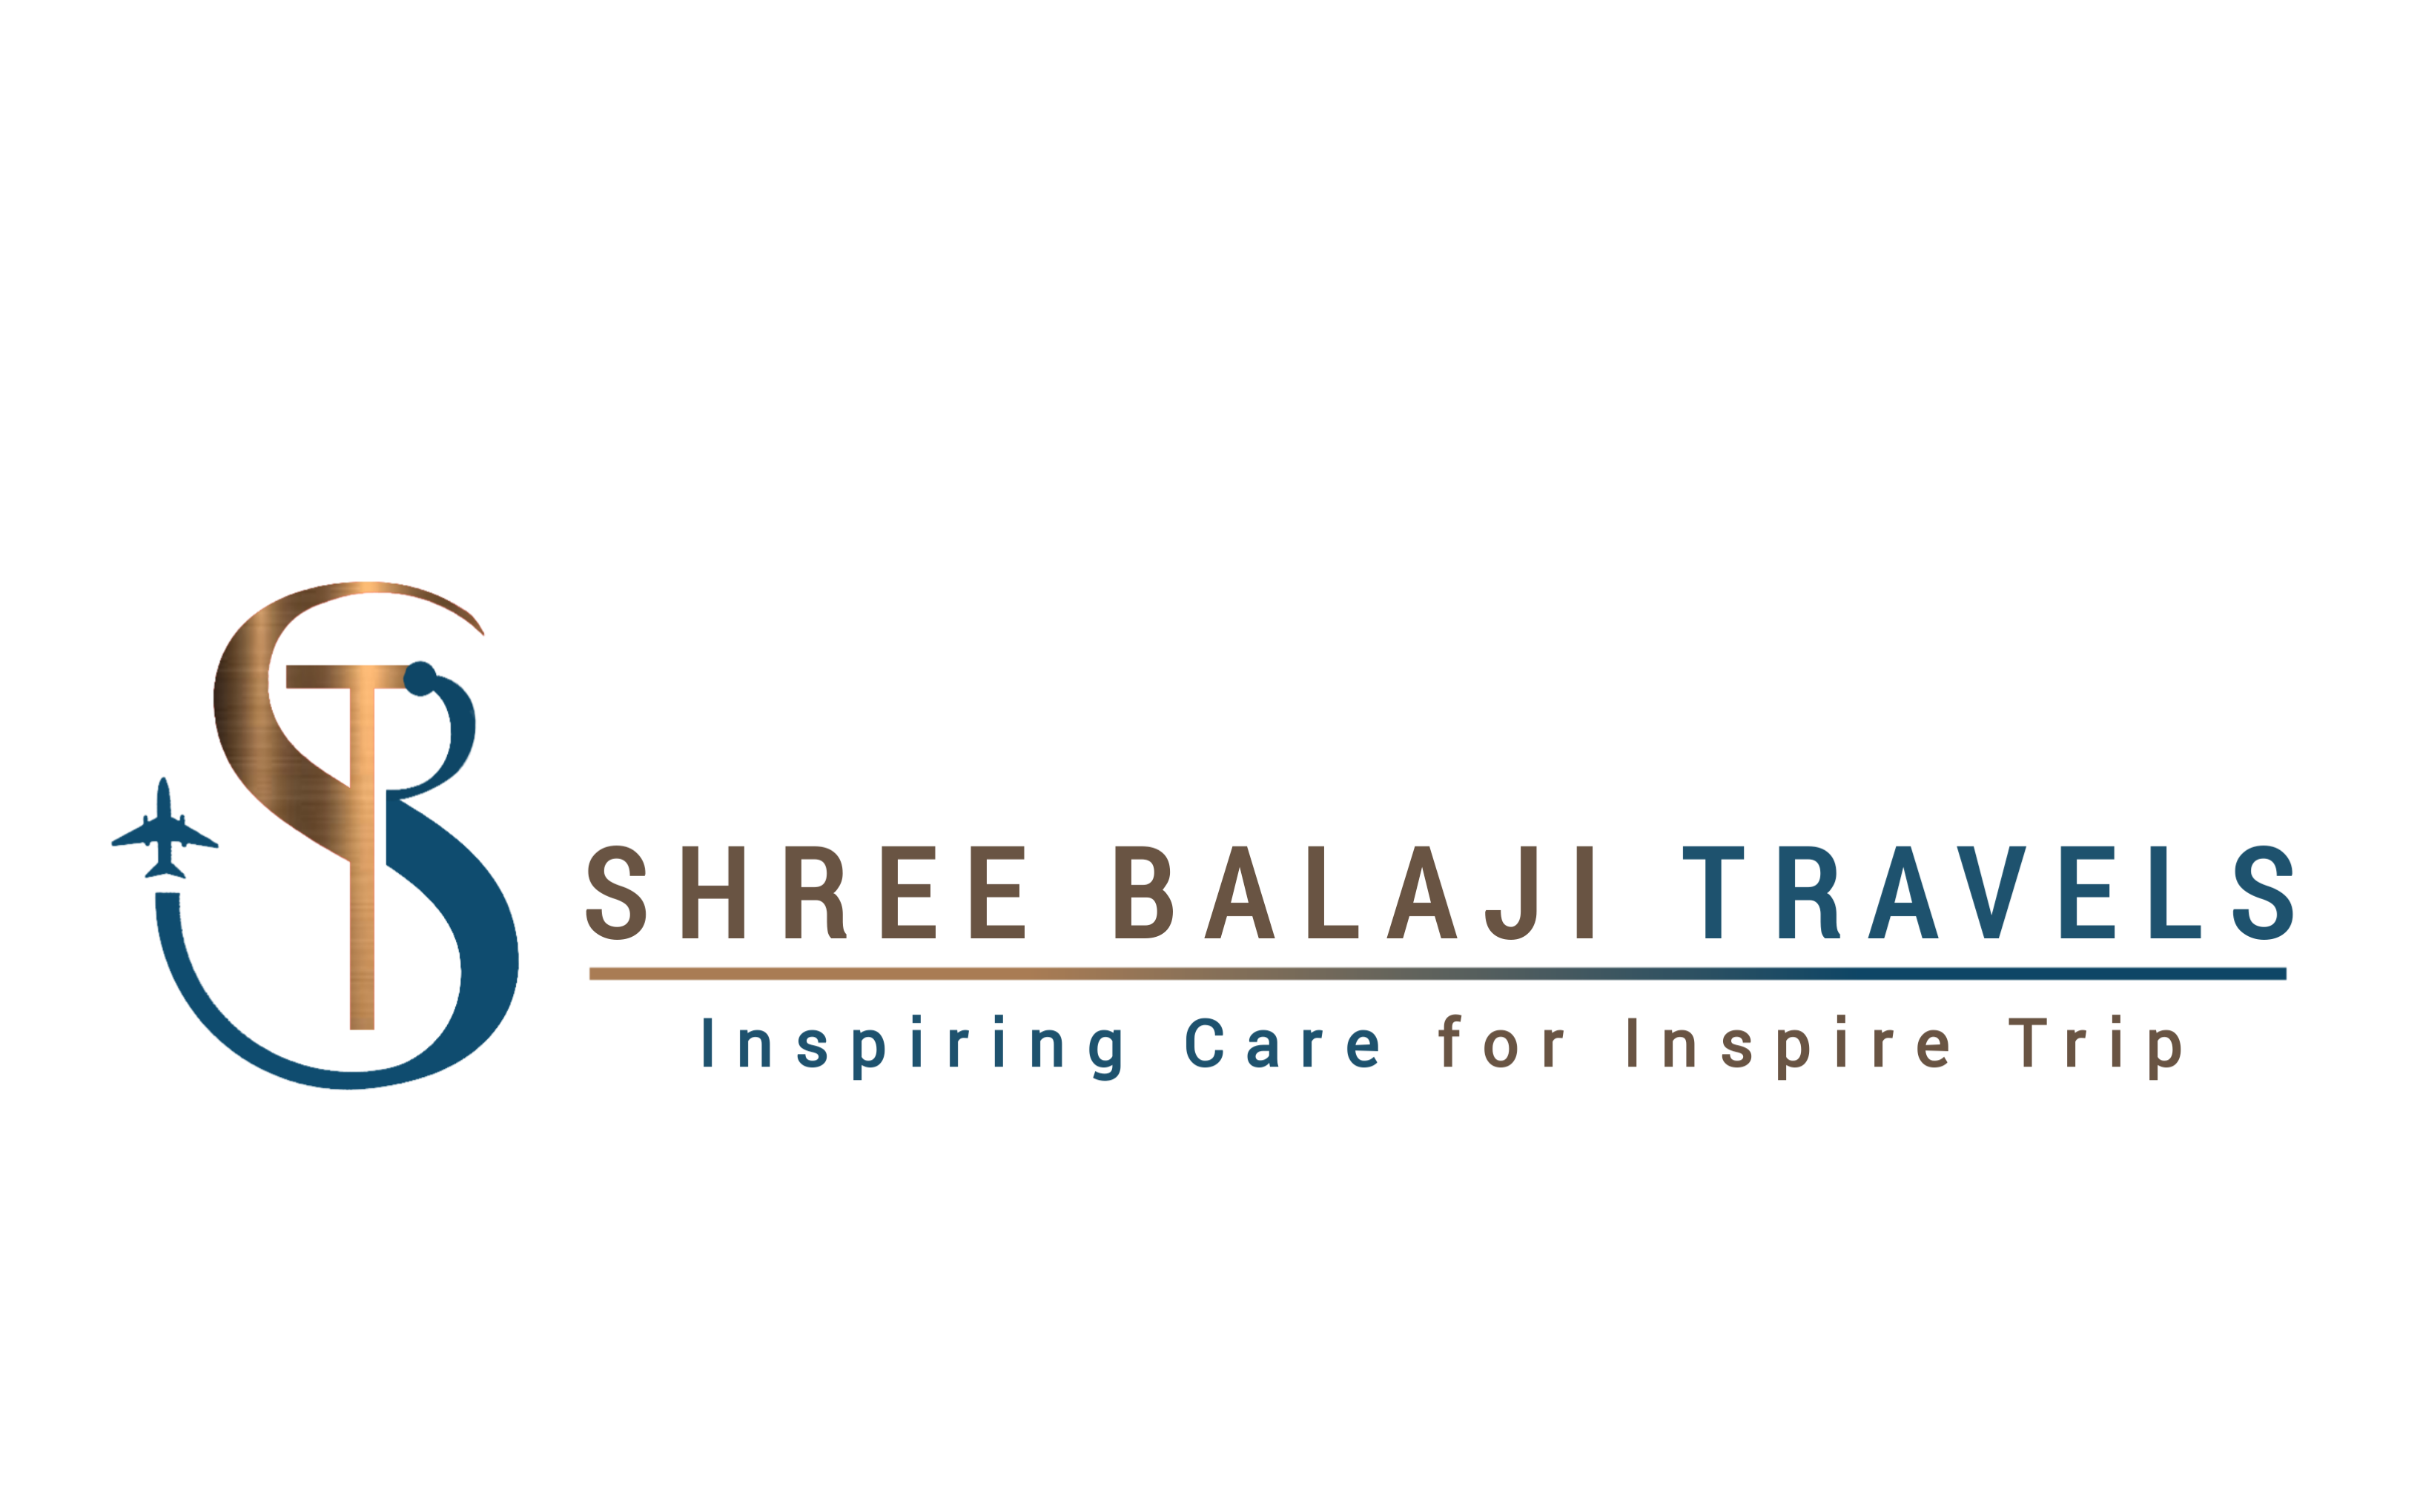 shree balaji tours and travels ahmedabad